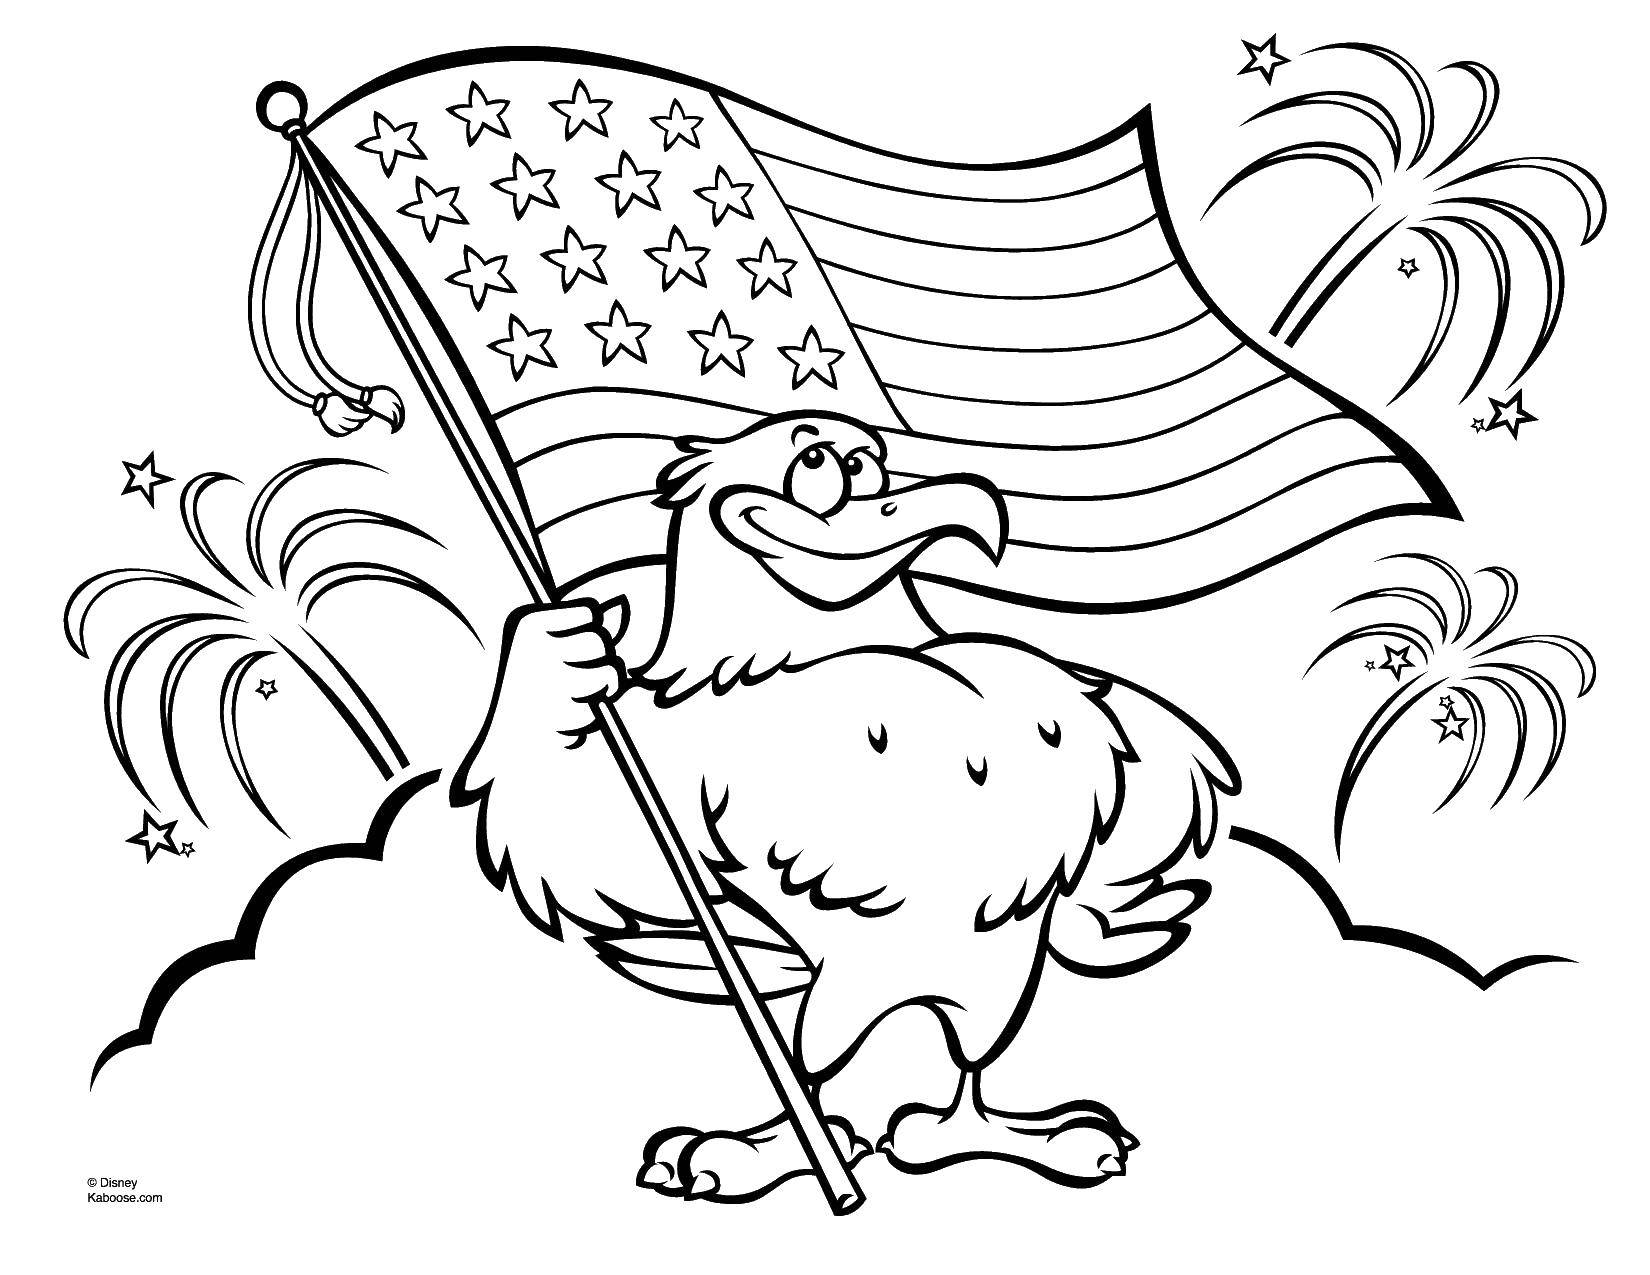 Coloring The eagle symbol of the USA. Category USA . Tags:  America, USA, flag.